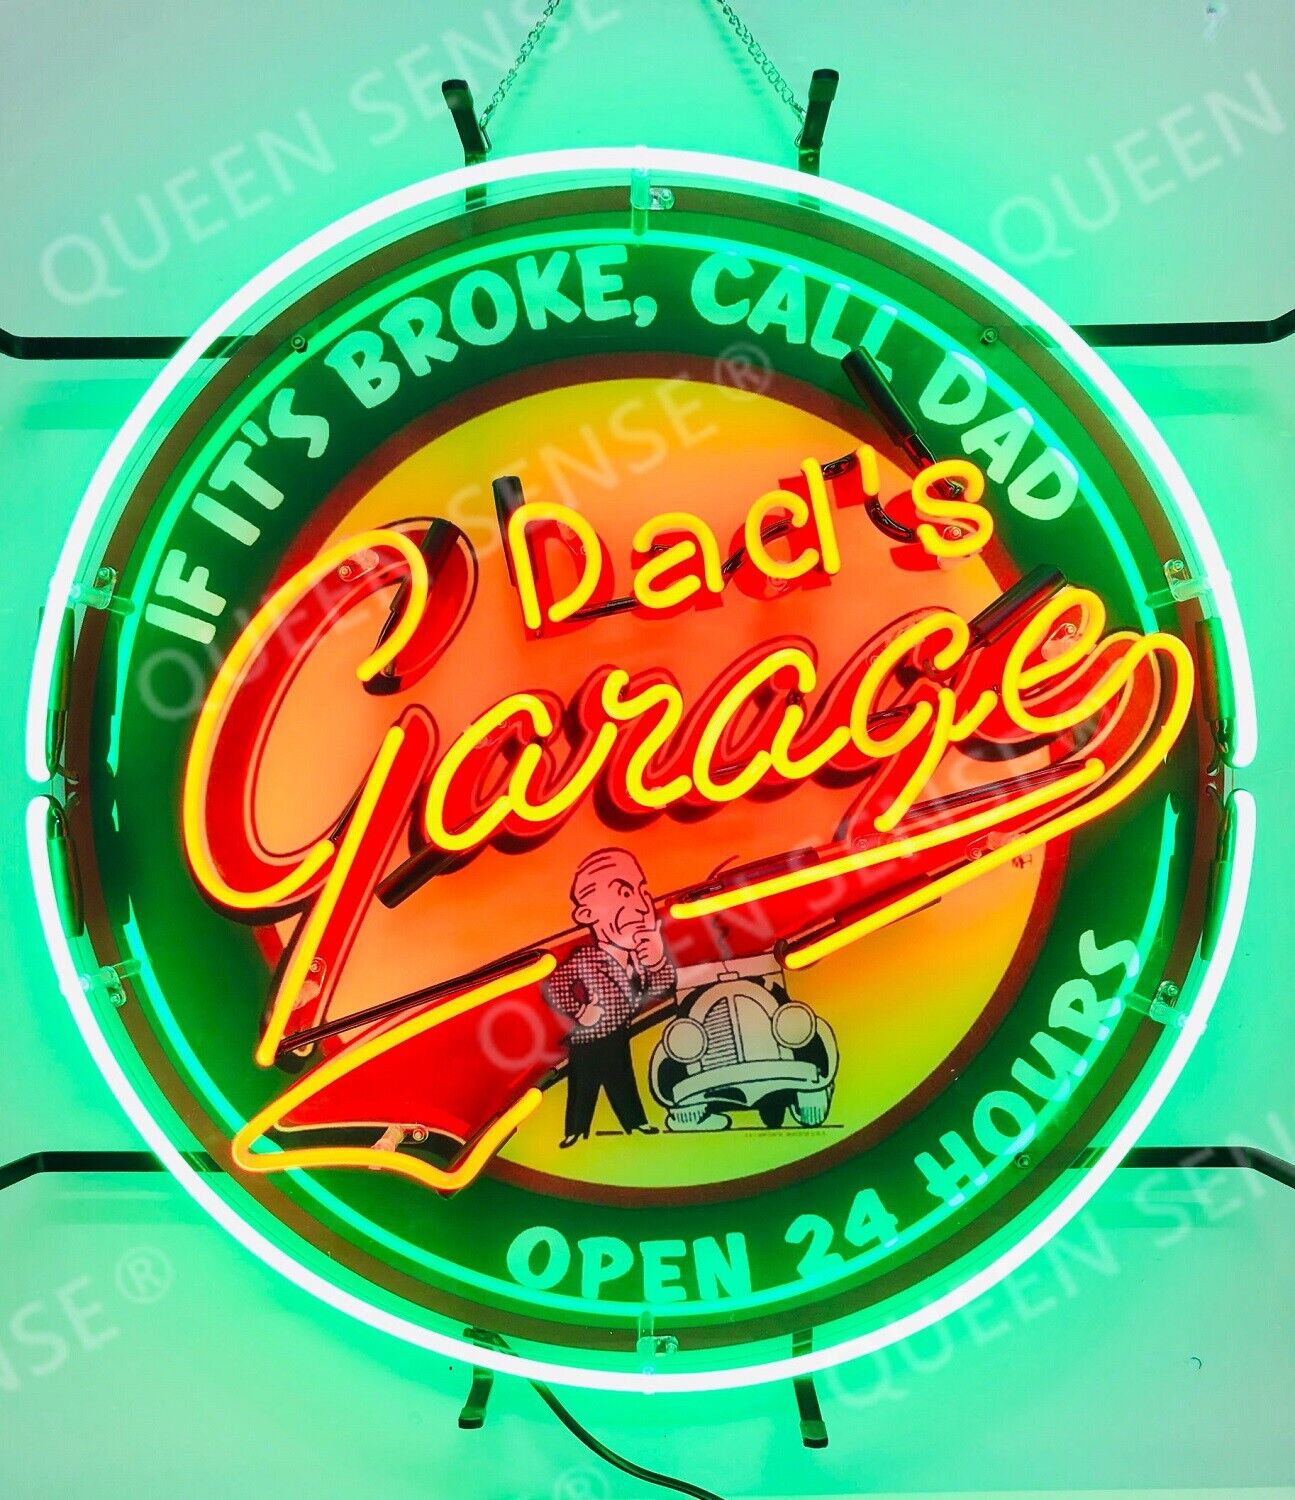 Dad's Garage Open 24 Hrs Car Auto 24